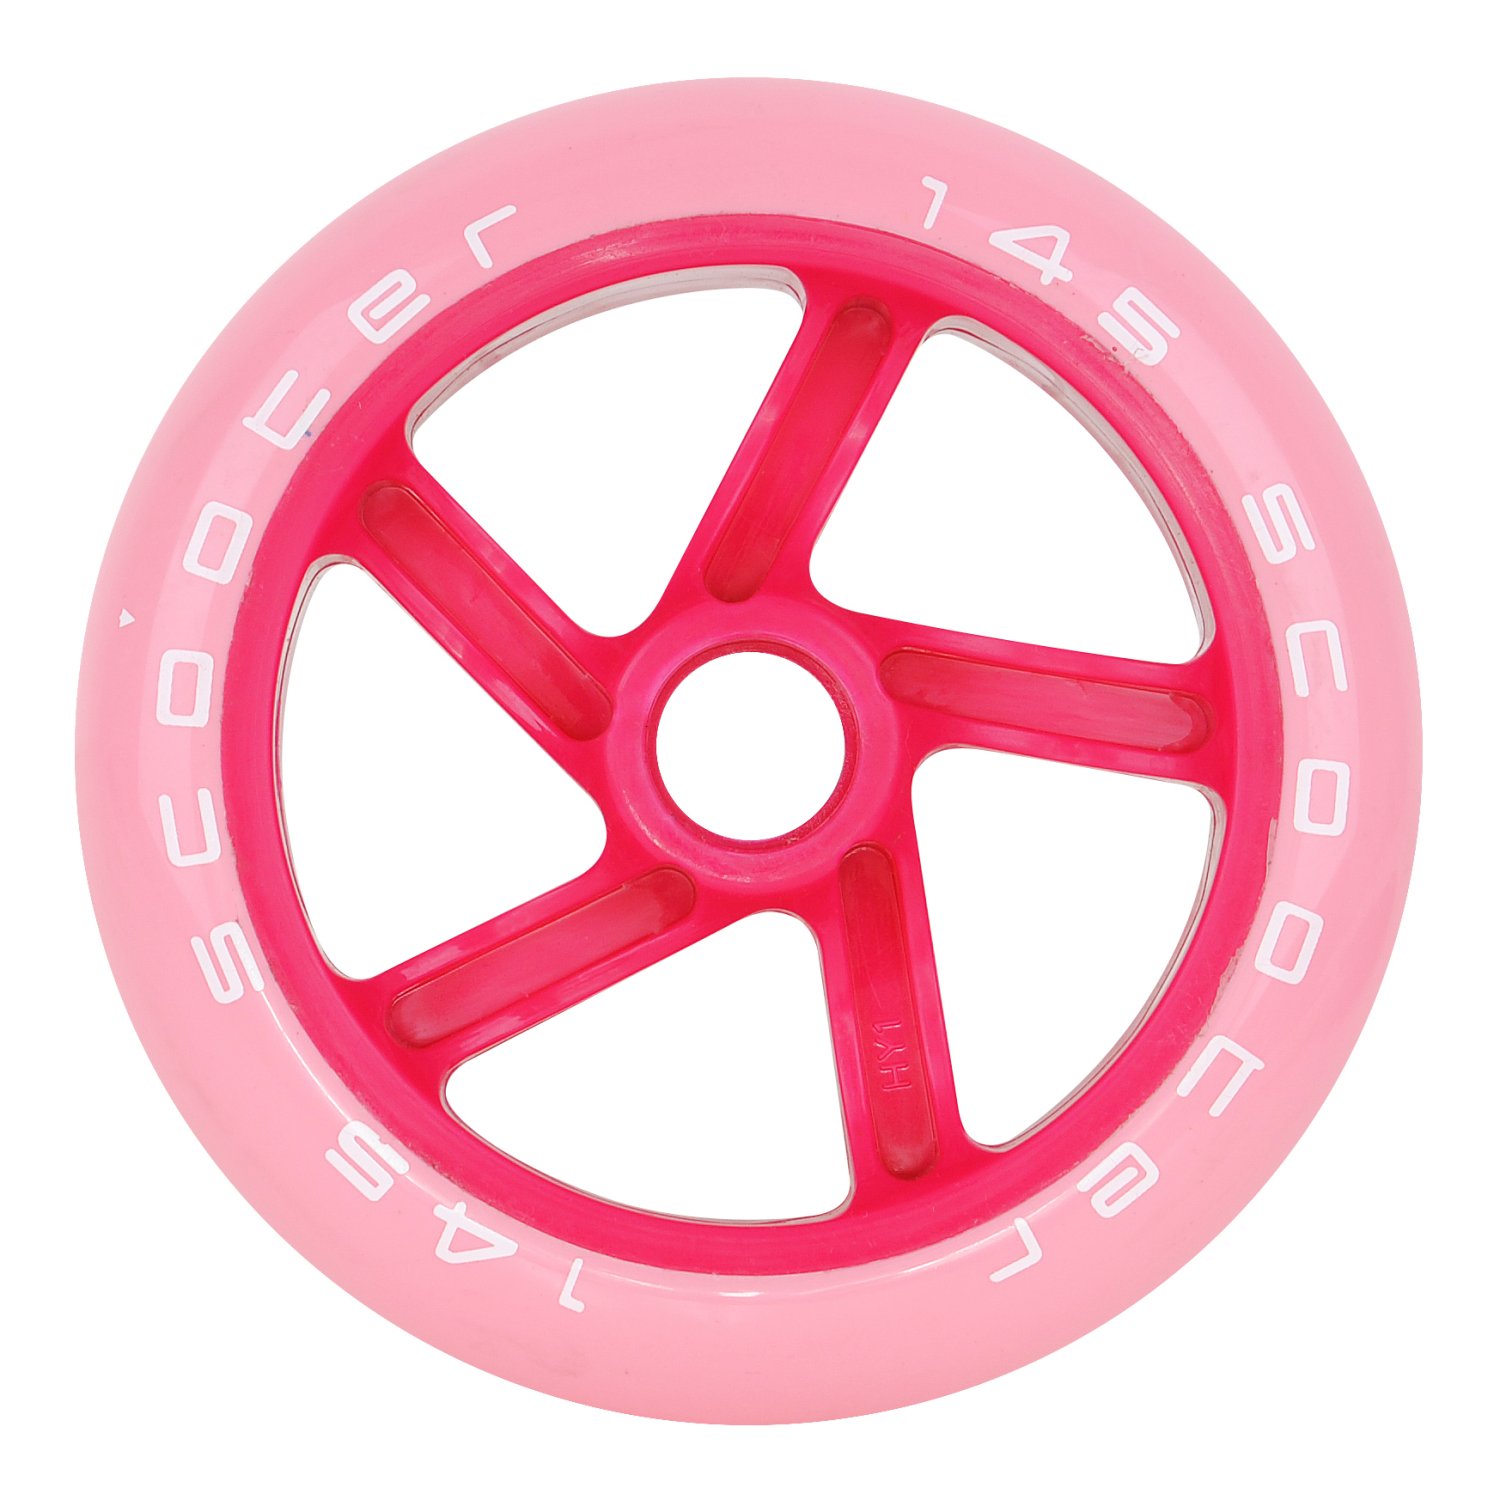 Колесо для самоката Tempish 2018 PU, 145x30 mm, 87A, розовый колесо для самоката tempish pu 85a 110x24 mm grey б р 105100026